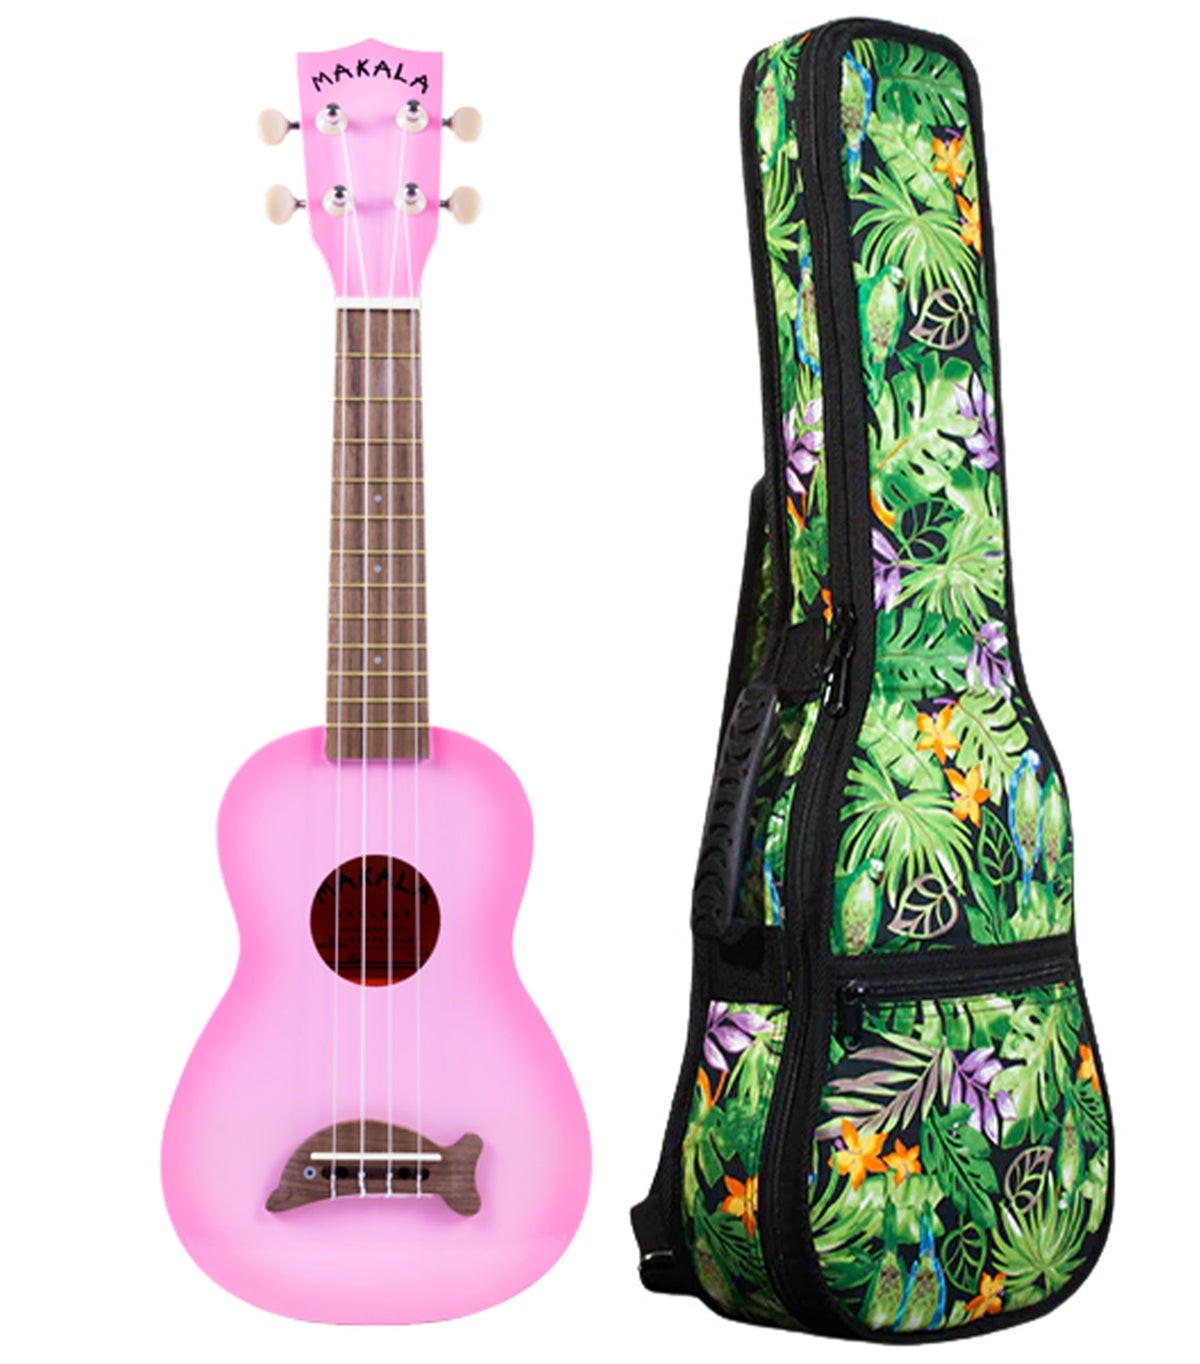 MK-SD/PKBRST Pink Burst Soprano Dolphin Ukulele Includes Gigbag Floral Print, Padded with Backpack Straps